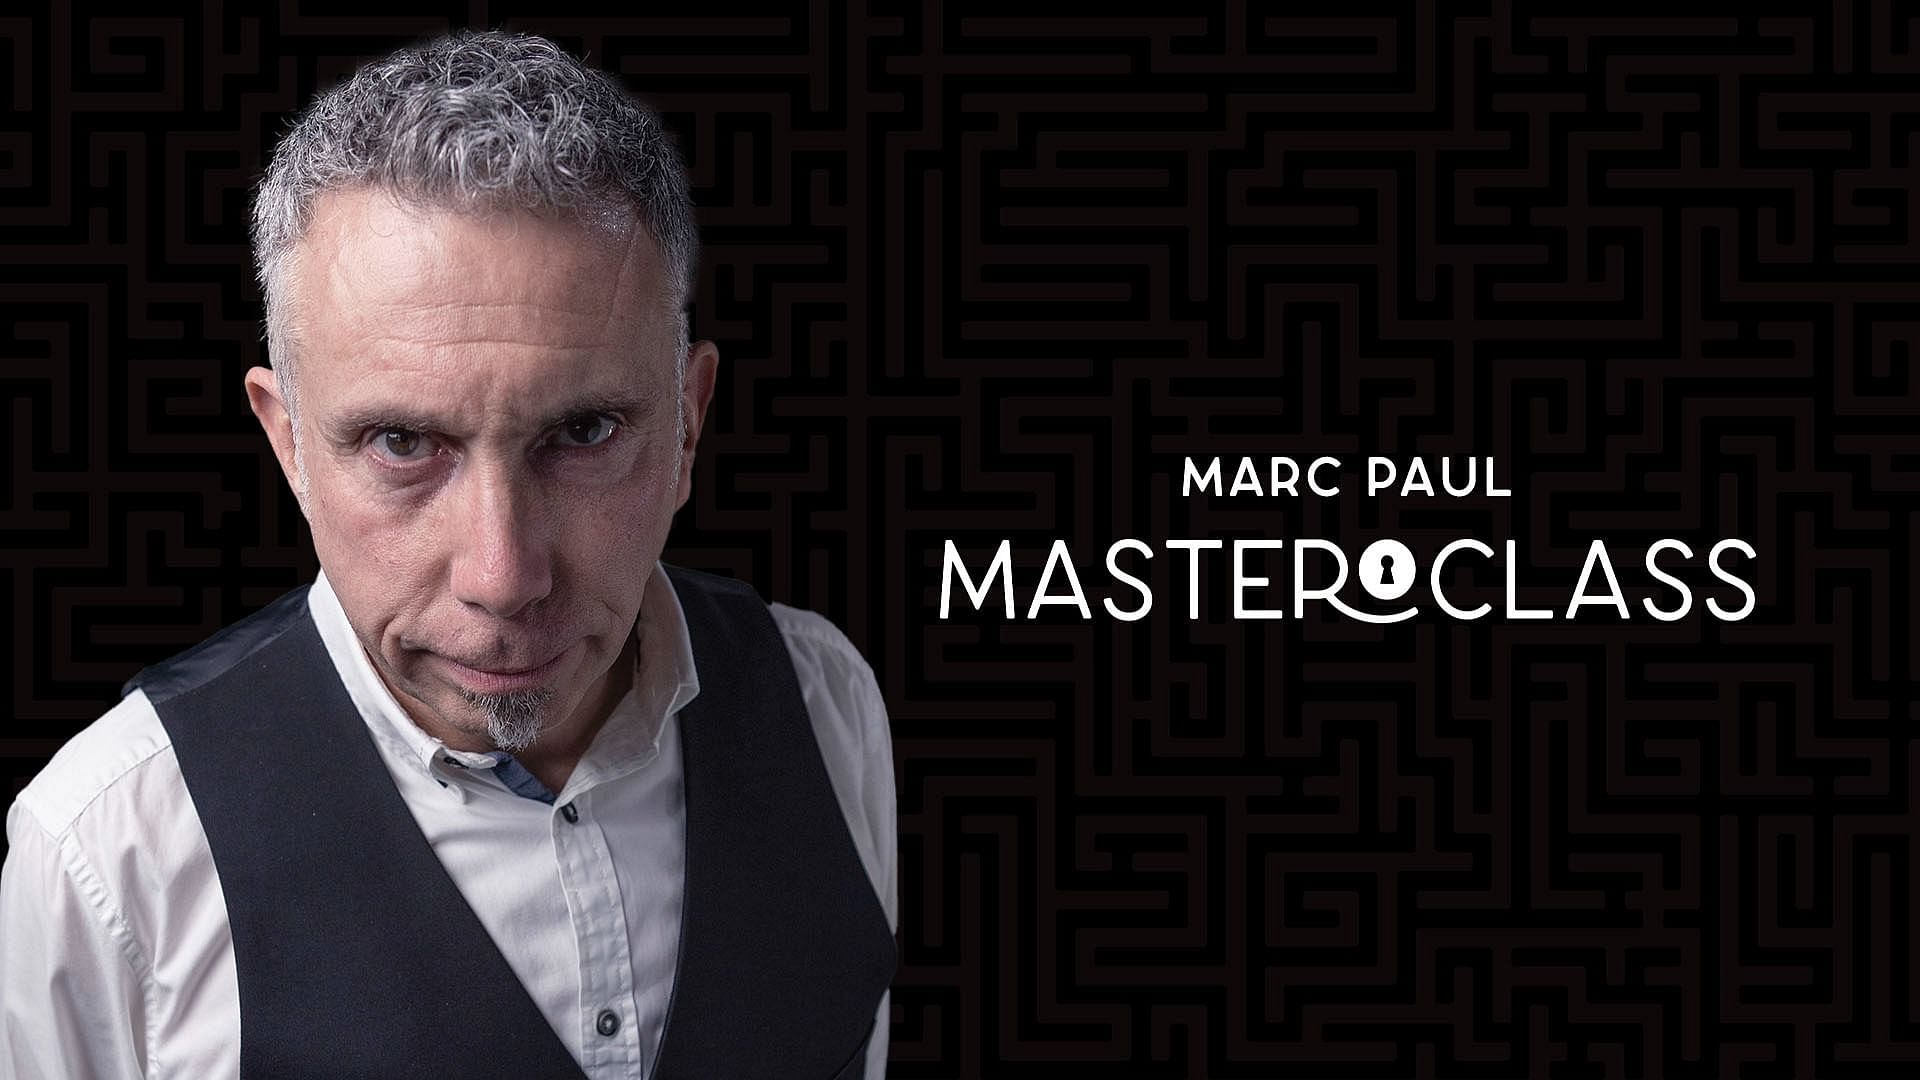 Marc Paul Masterclass